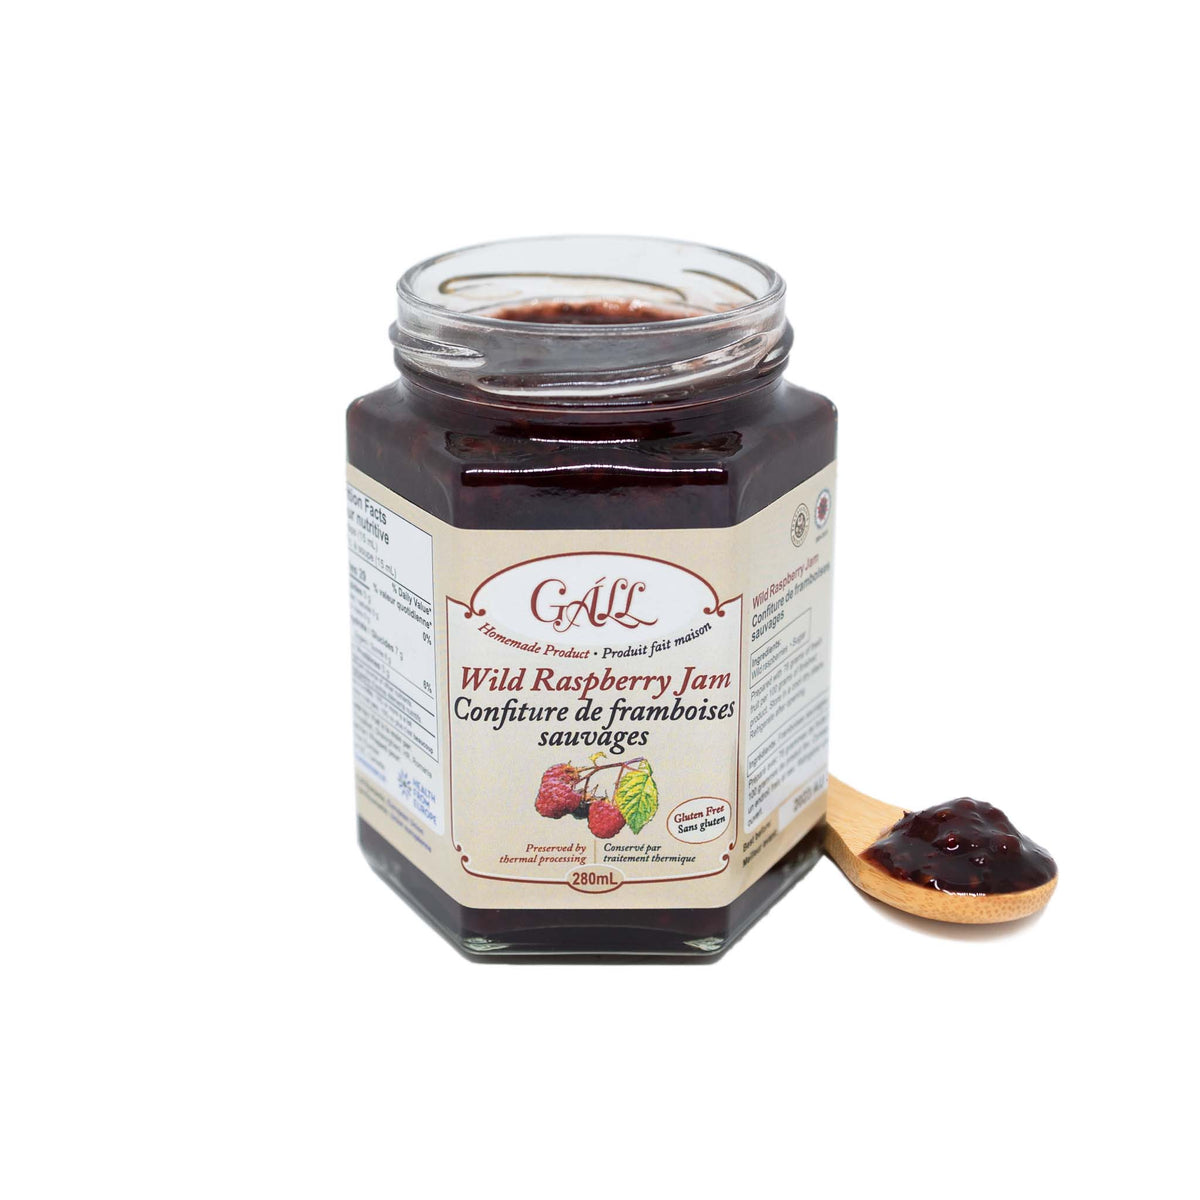 Artisanal Wild Raspberry Jam open jar spoon Health from Europe